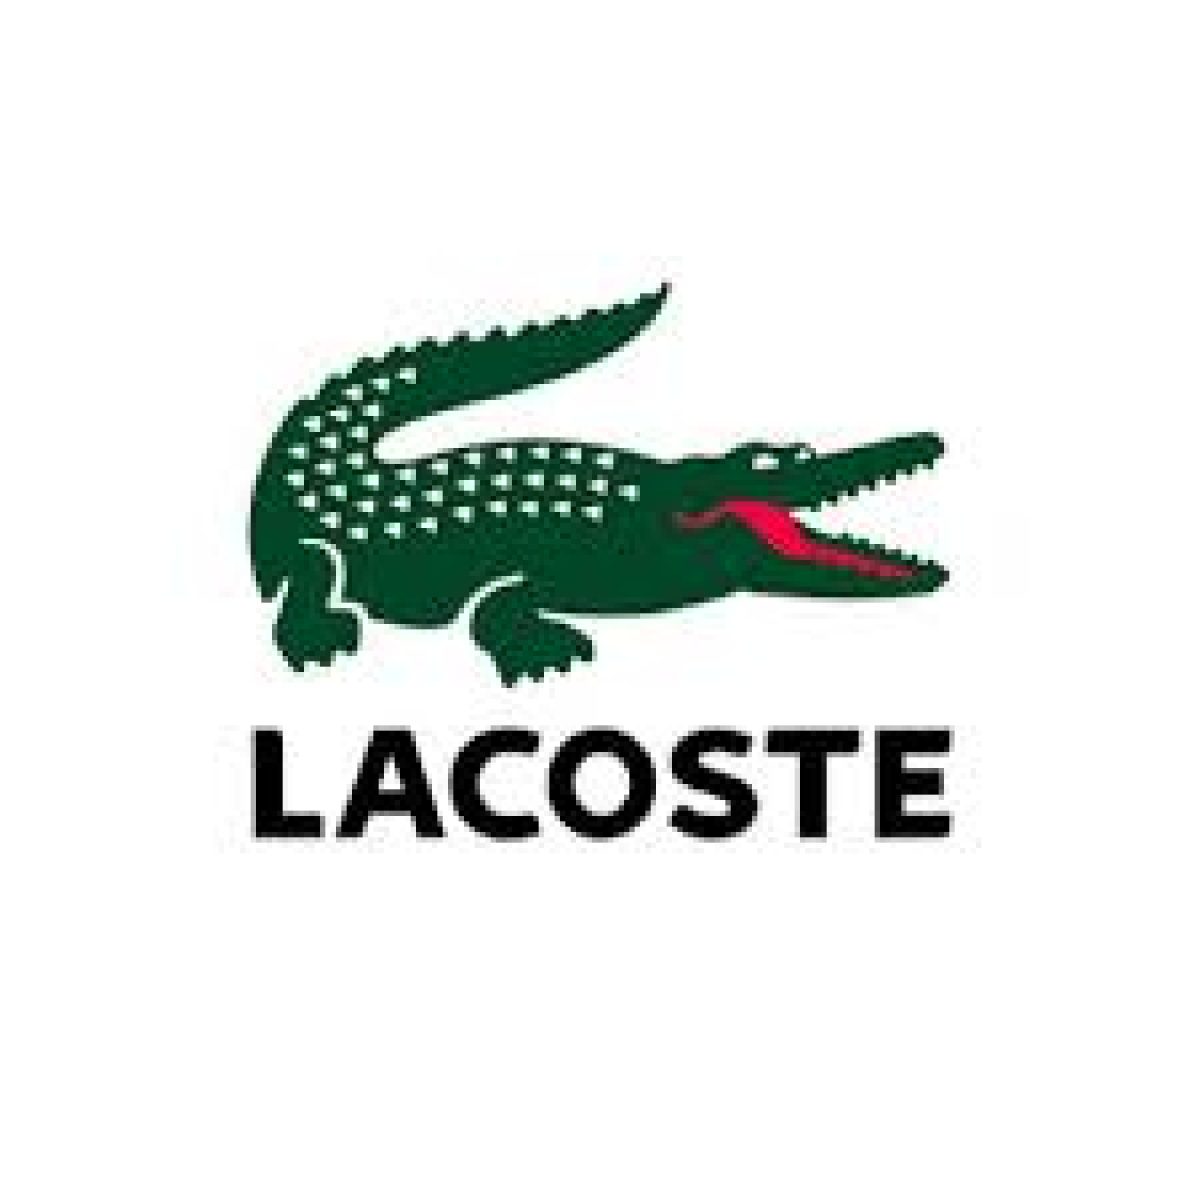 lacoste discount code 2019